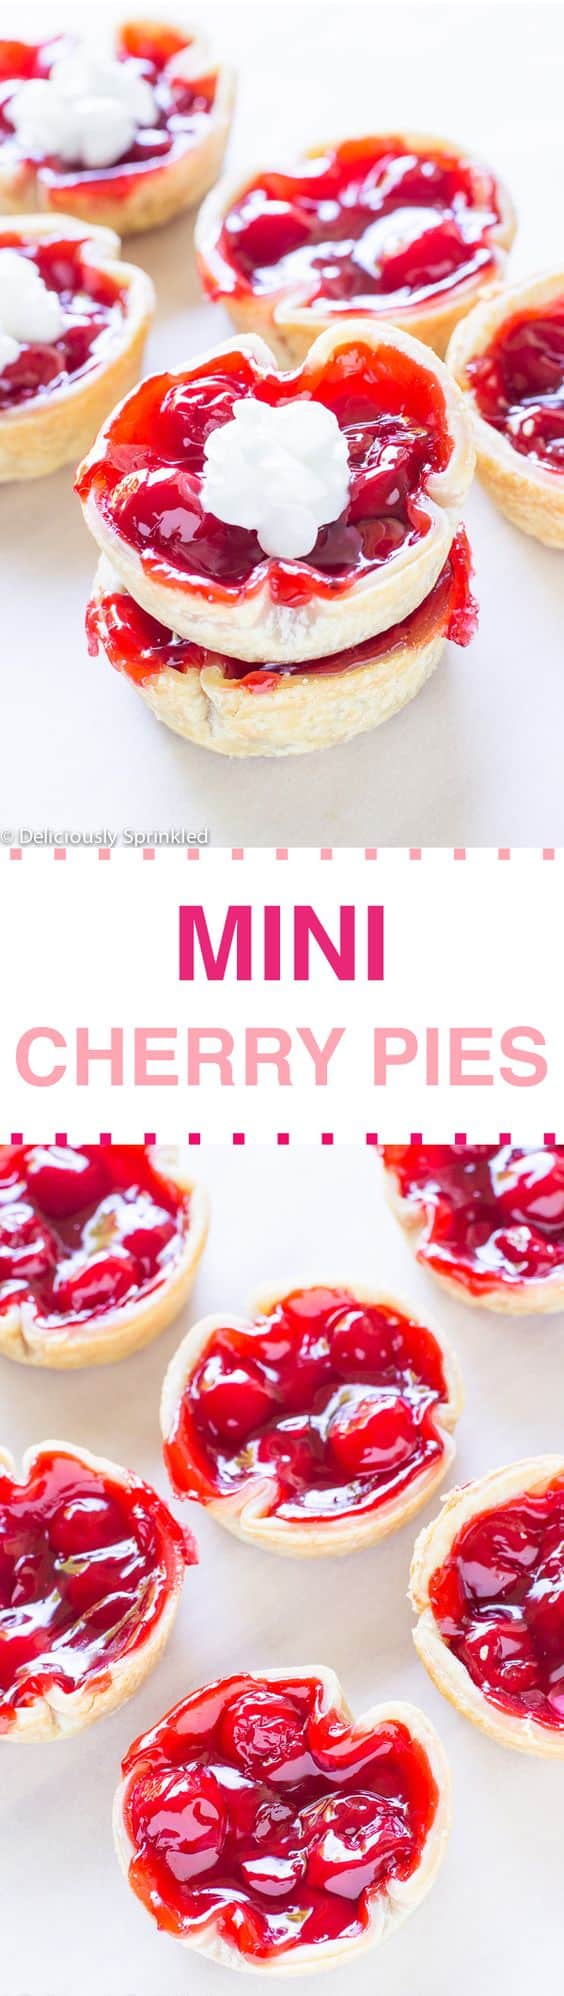 Mini Cherry Pies Recipe